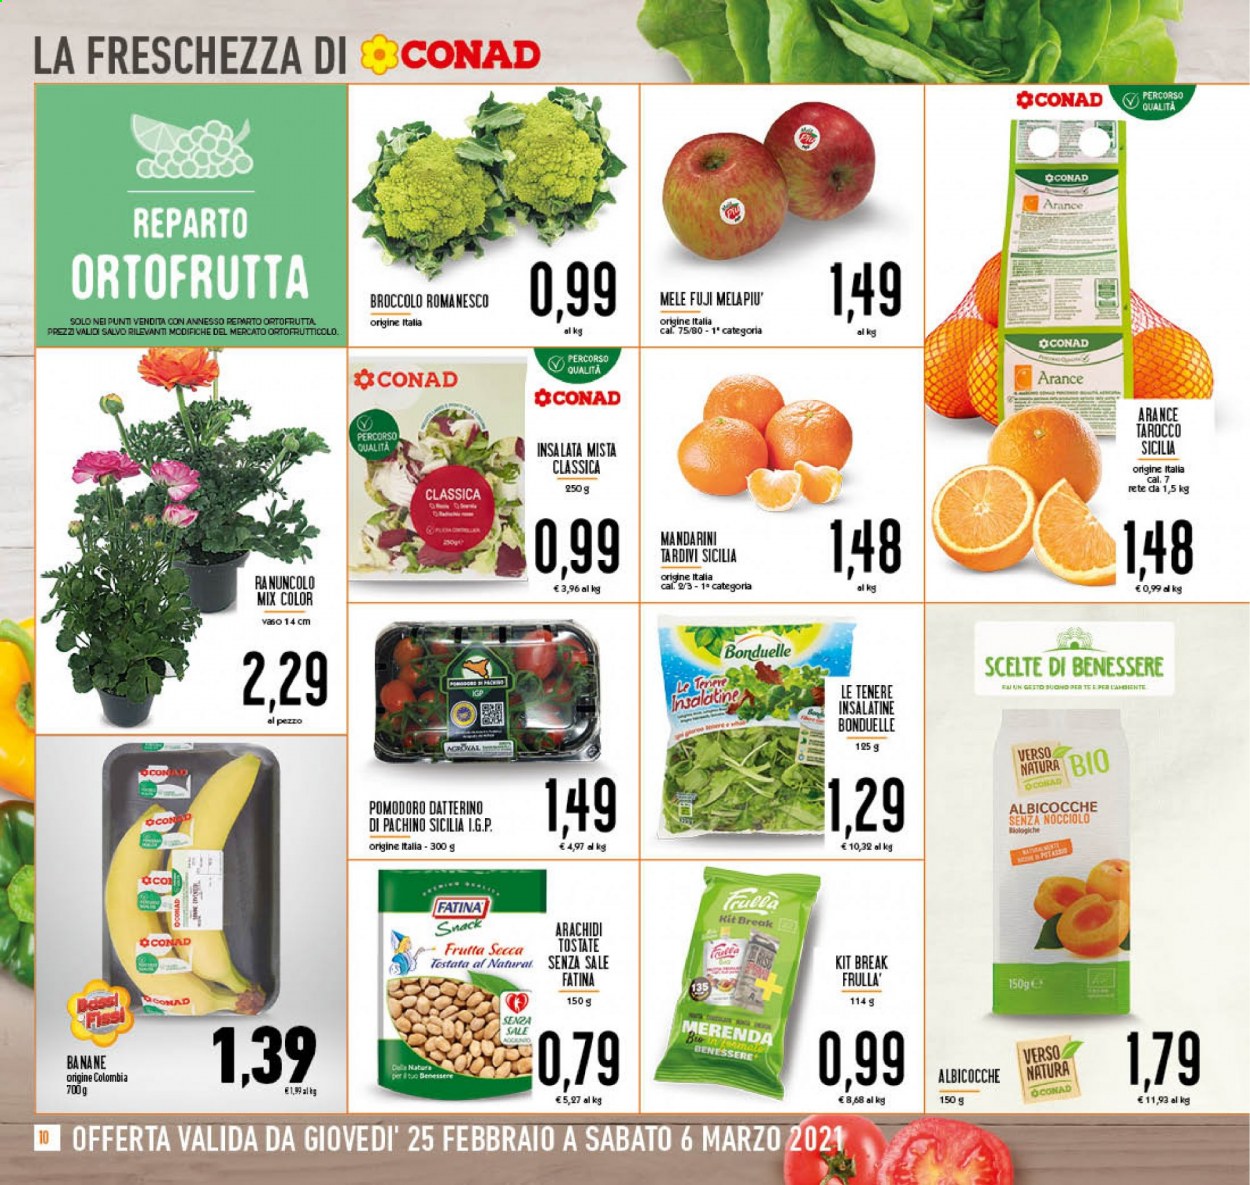 thumbnail - Volantino Conad - 25/2/2021 - 6/3/2021 - Prodotti in offerta - Bonduelle, pomodorini, mele, arance, mandarini, arachidi, arachidi tostate, Fatina. Pagina 10.